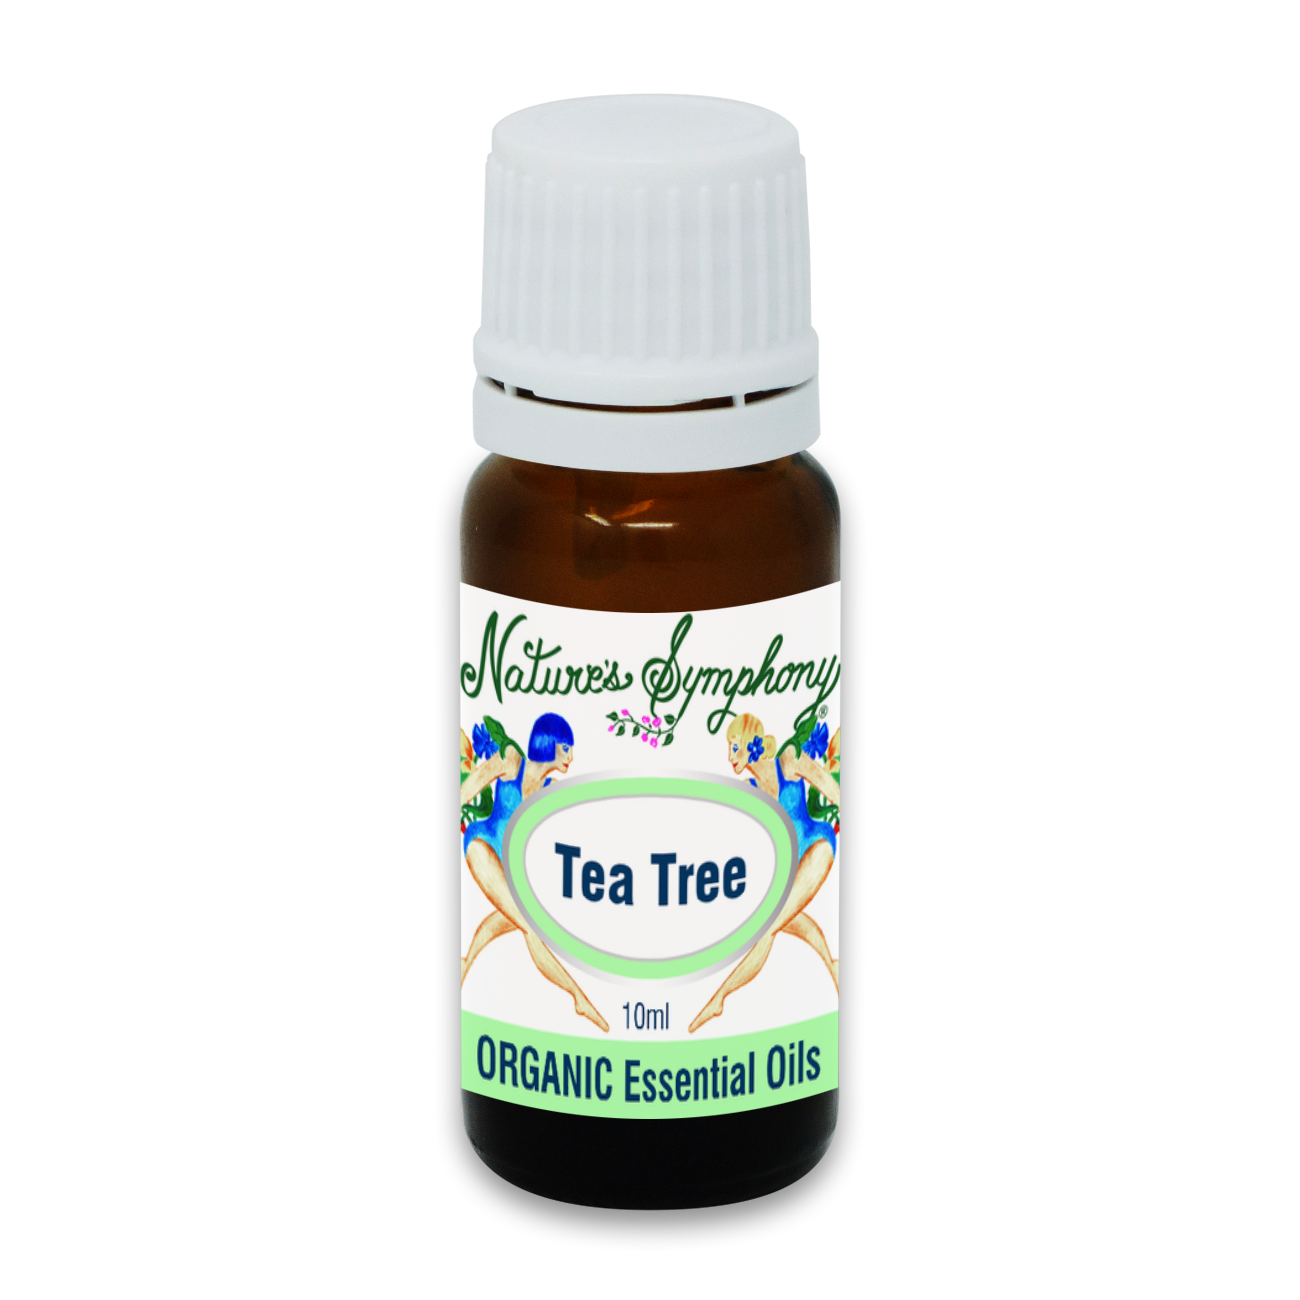 Tea Tree, Organic/Wildcrafted oil - 10ml